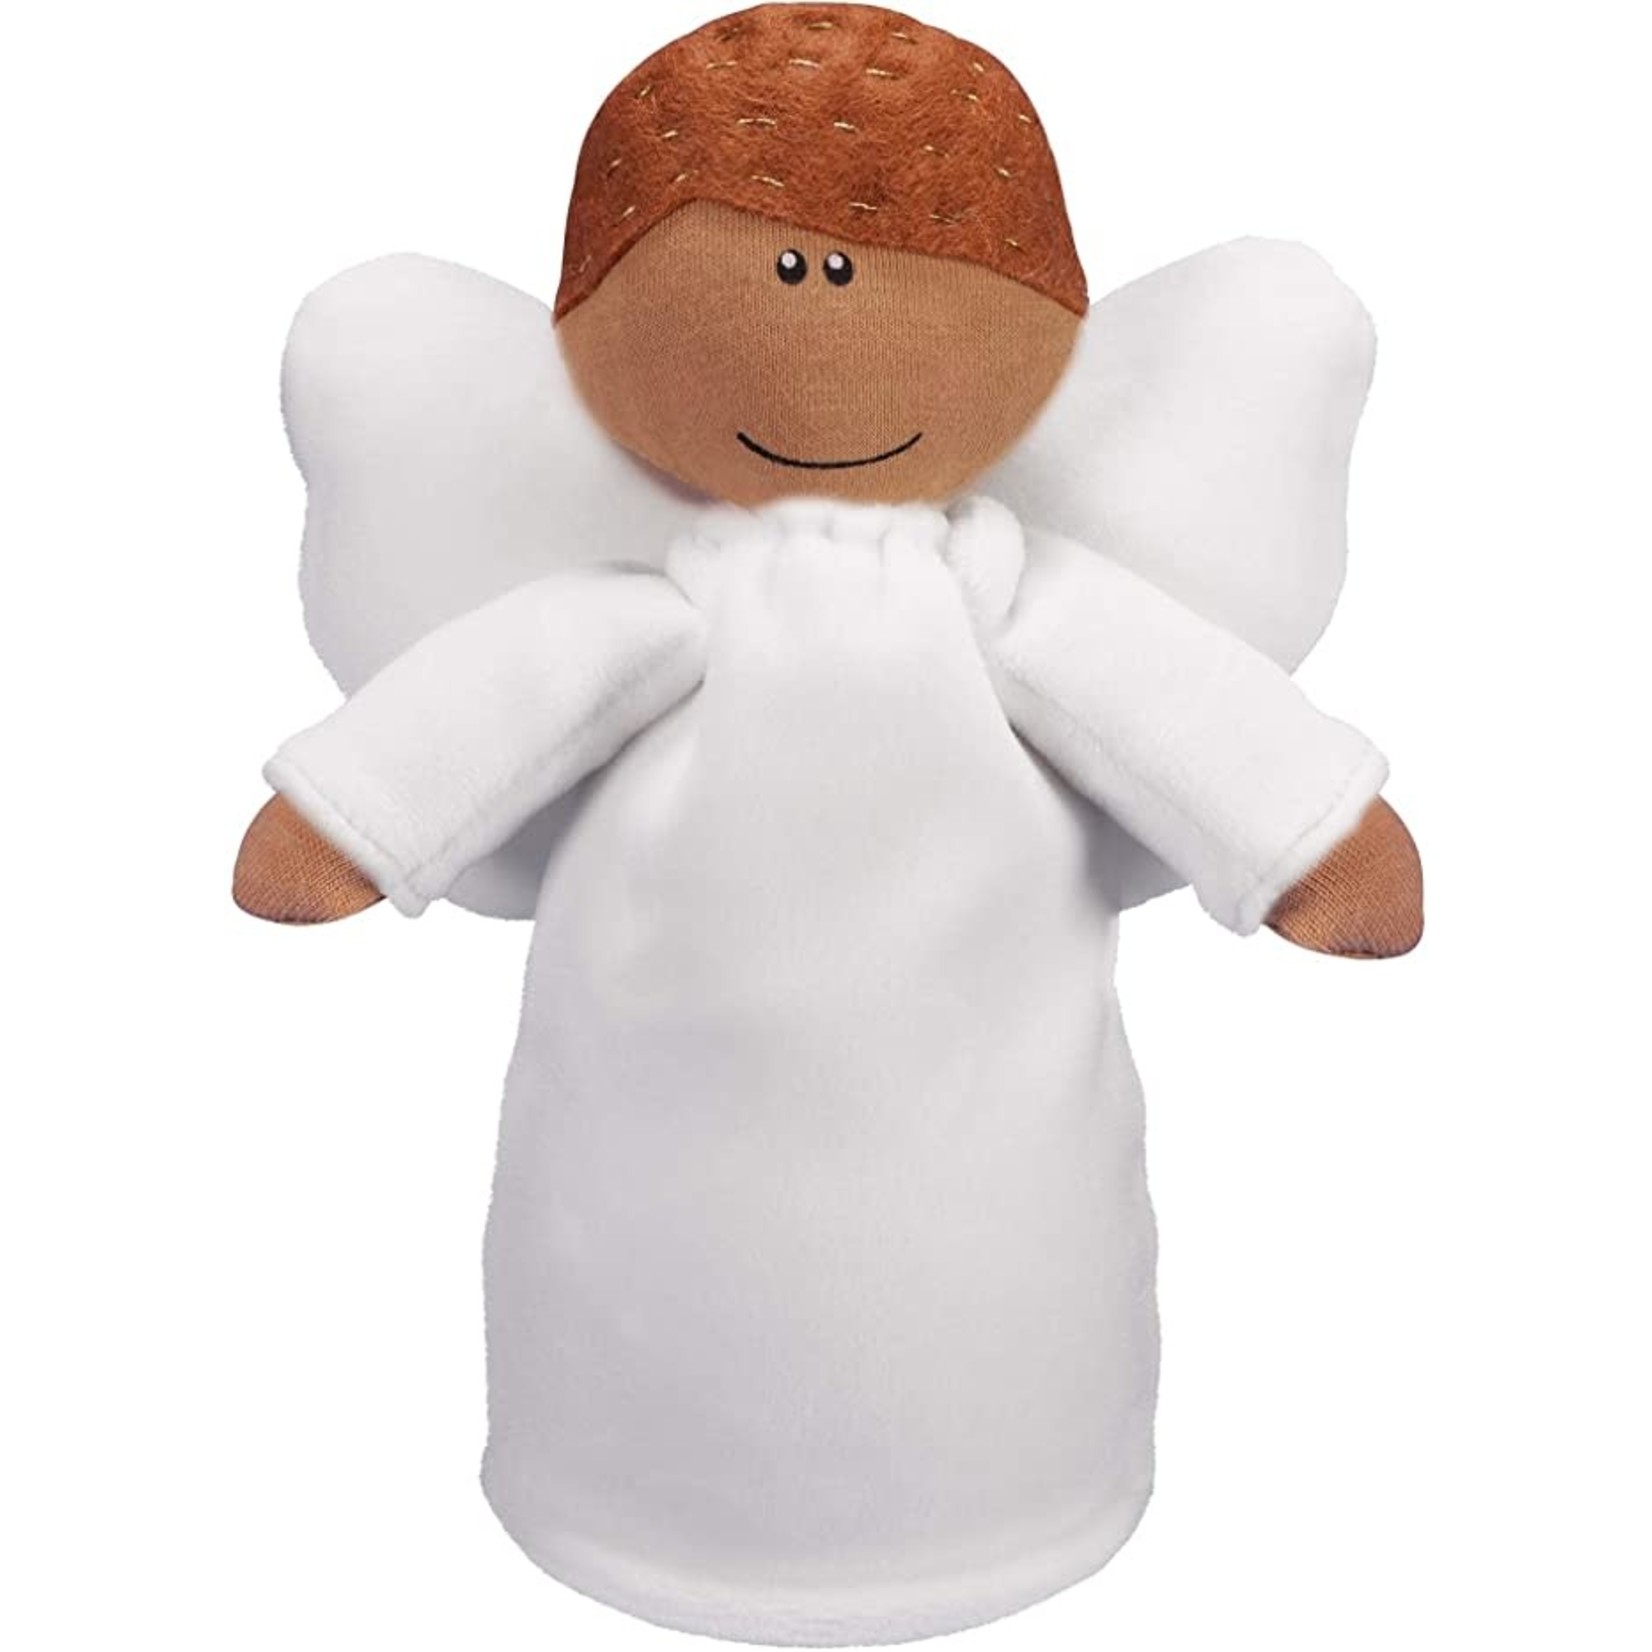 The Angel Gift Individual Angel Plush